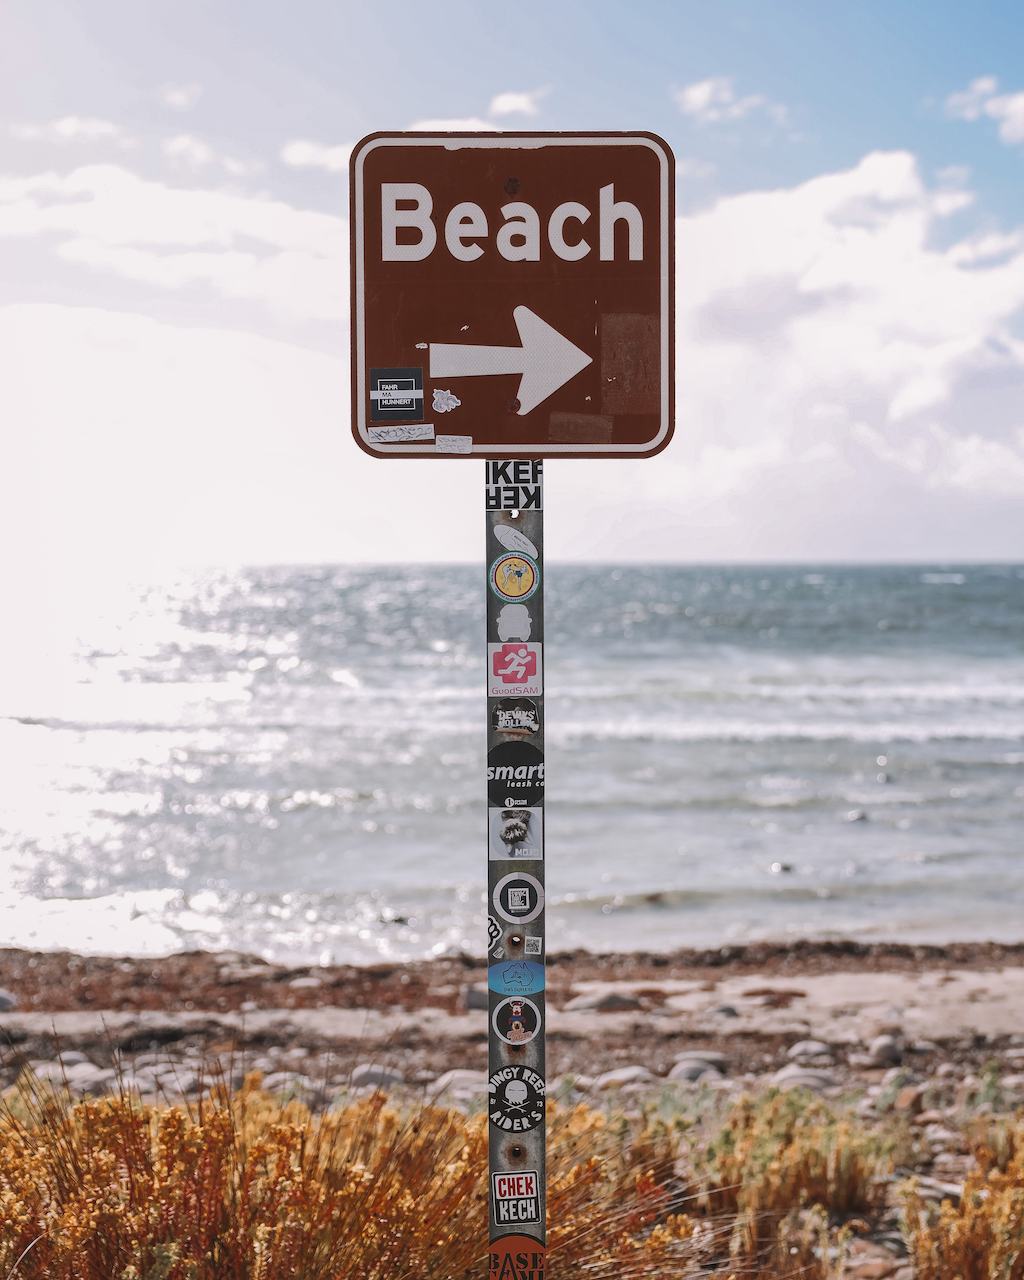 Panneau qui indique la plage - Kangaroo Island - South Australia (SA) - Australie